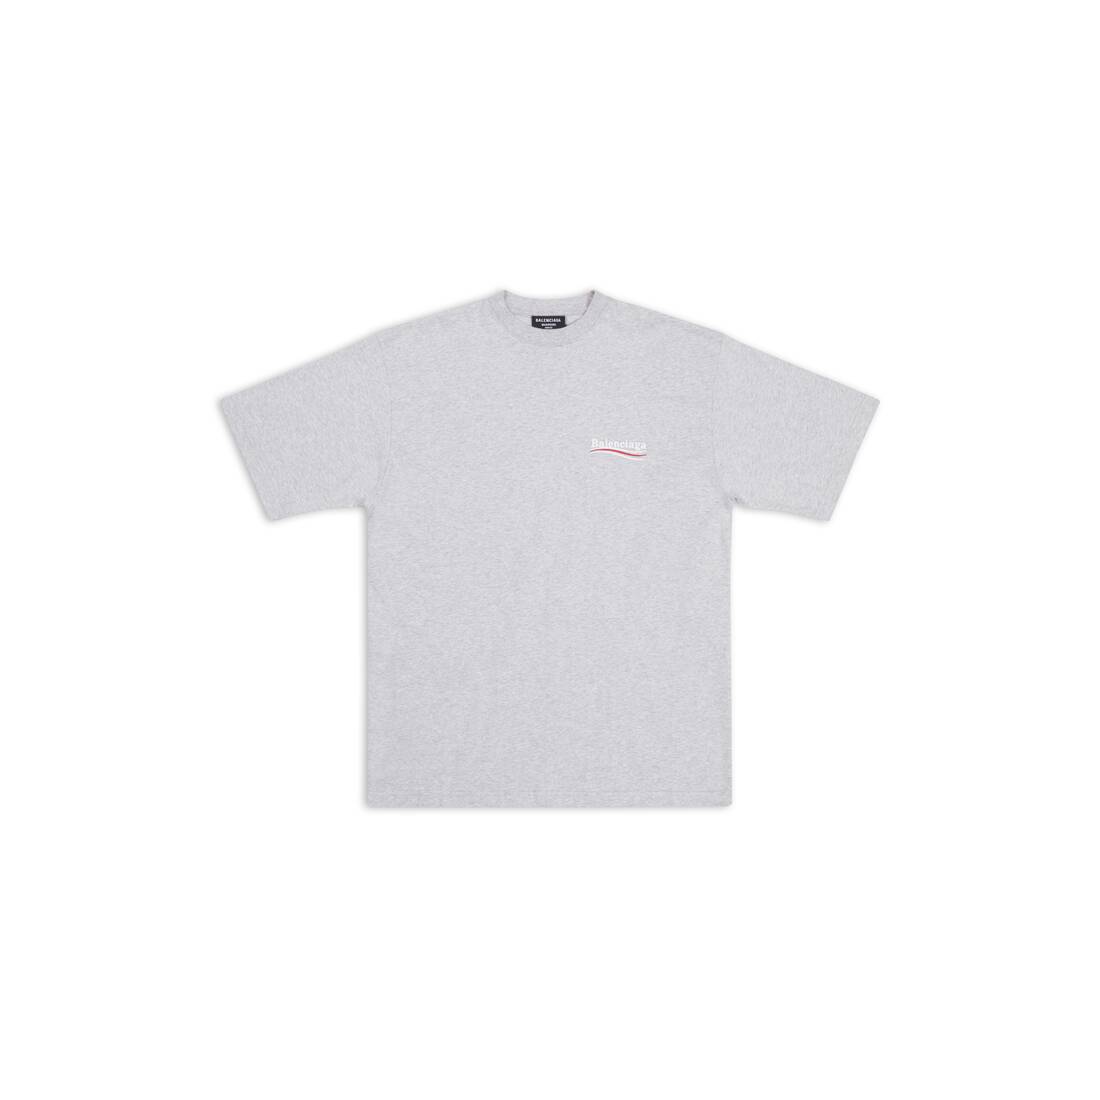 Balenciaga Large Fit T-shirt White